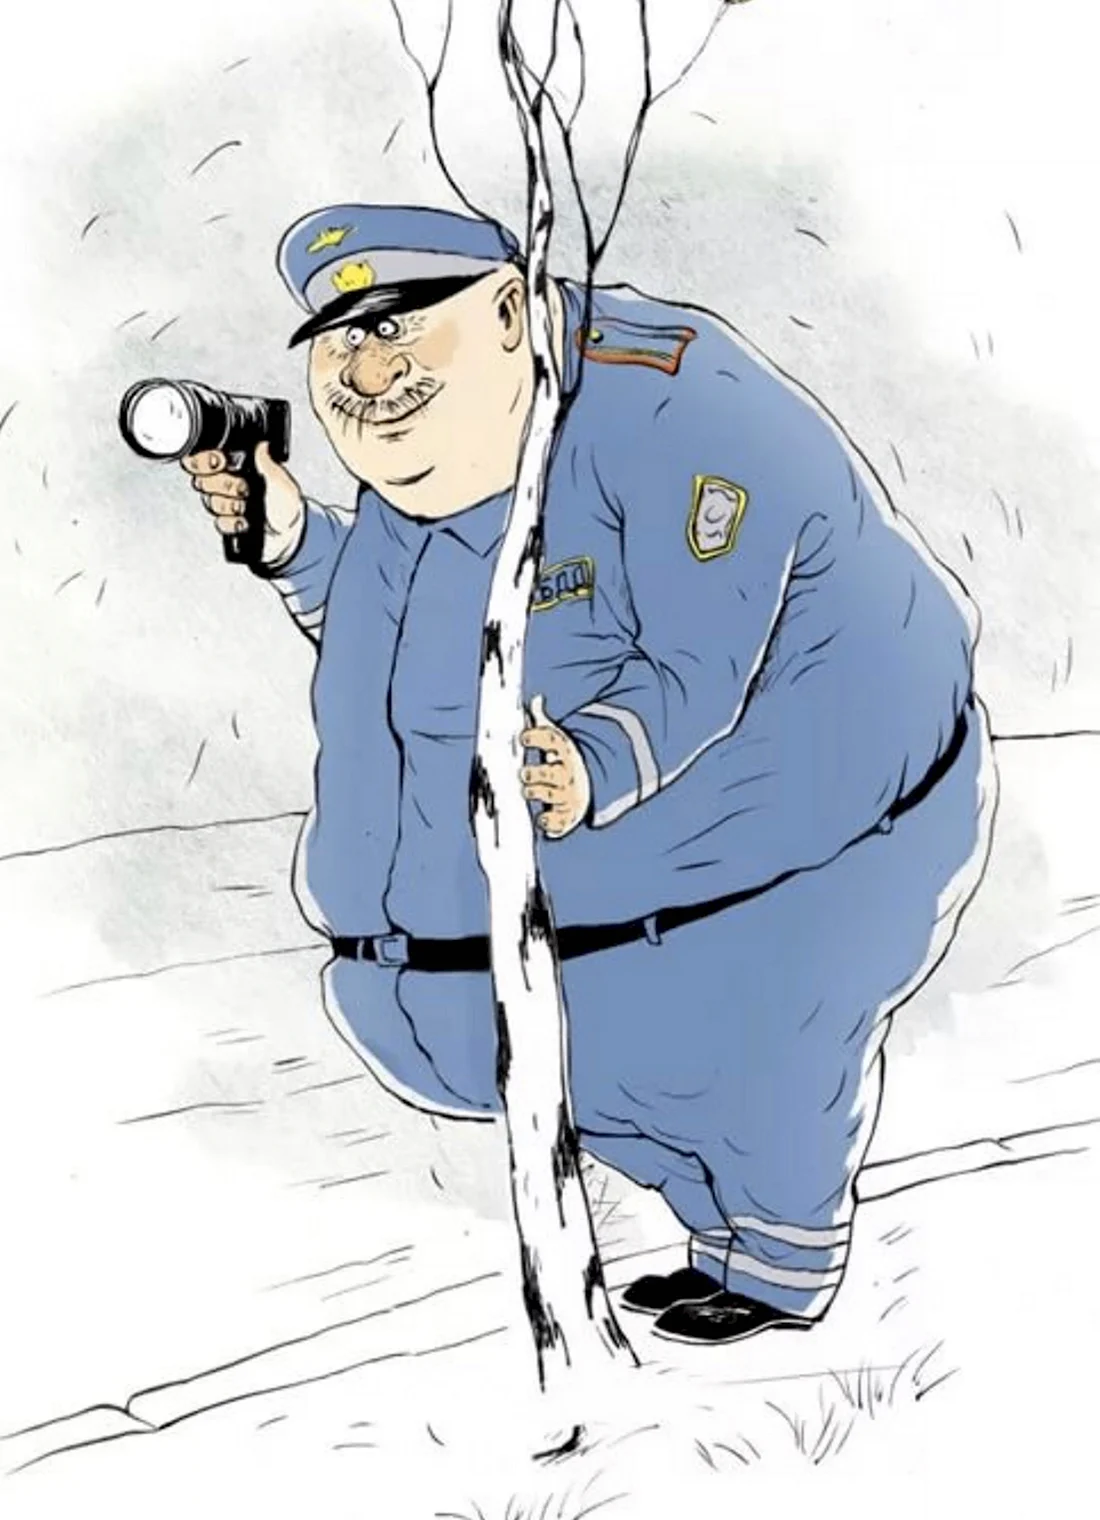 Милиционер карикатура. Анекдот в картинке